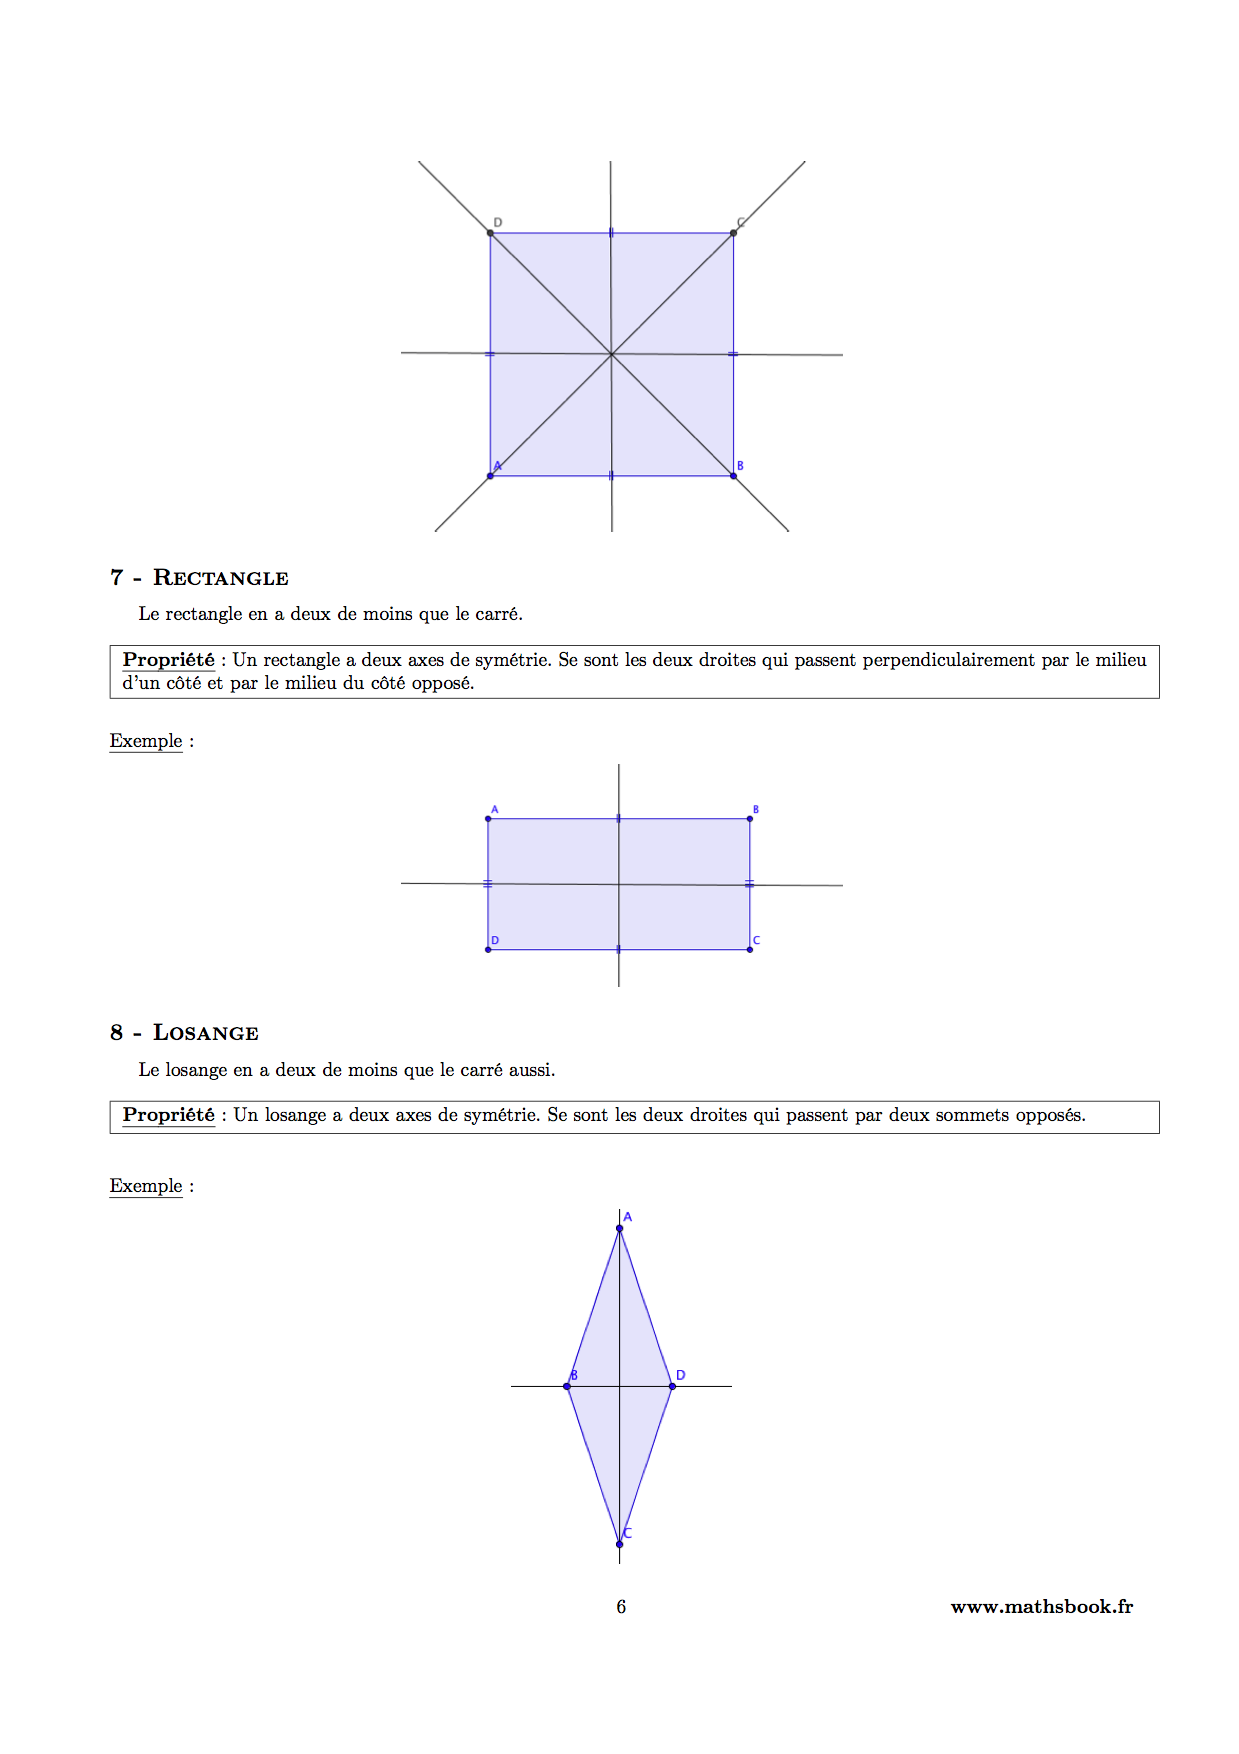 axe symetrie rectangle losange